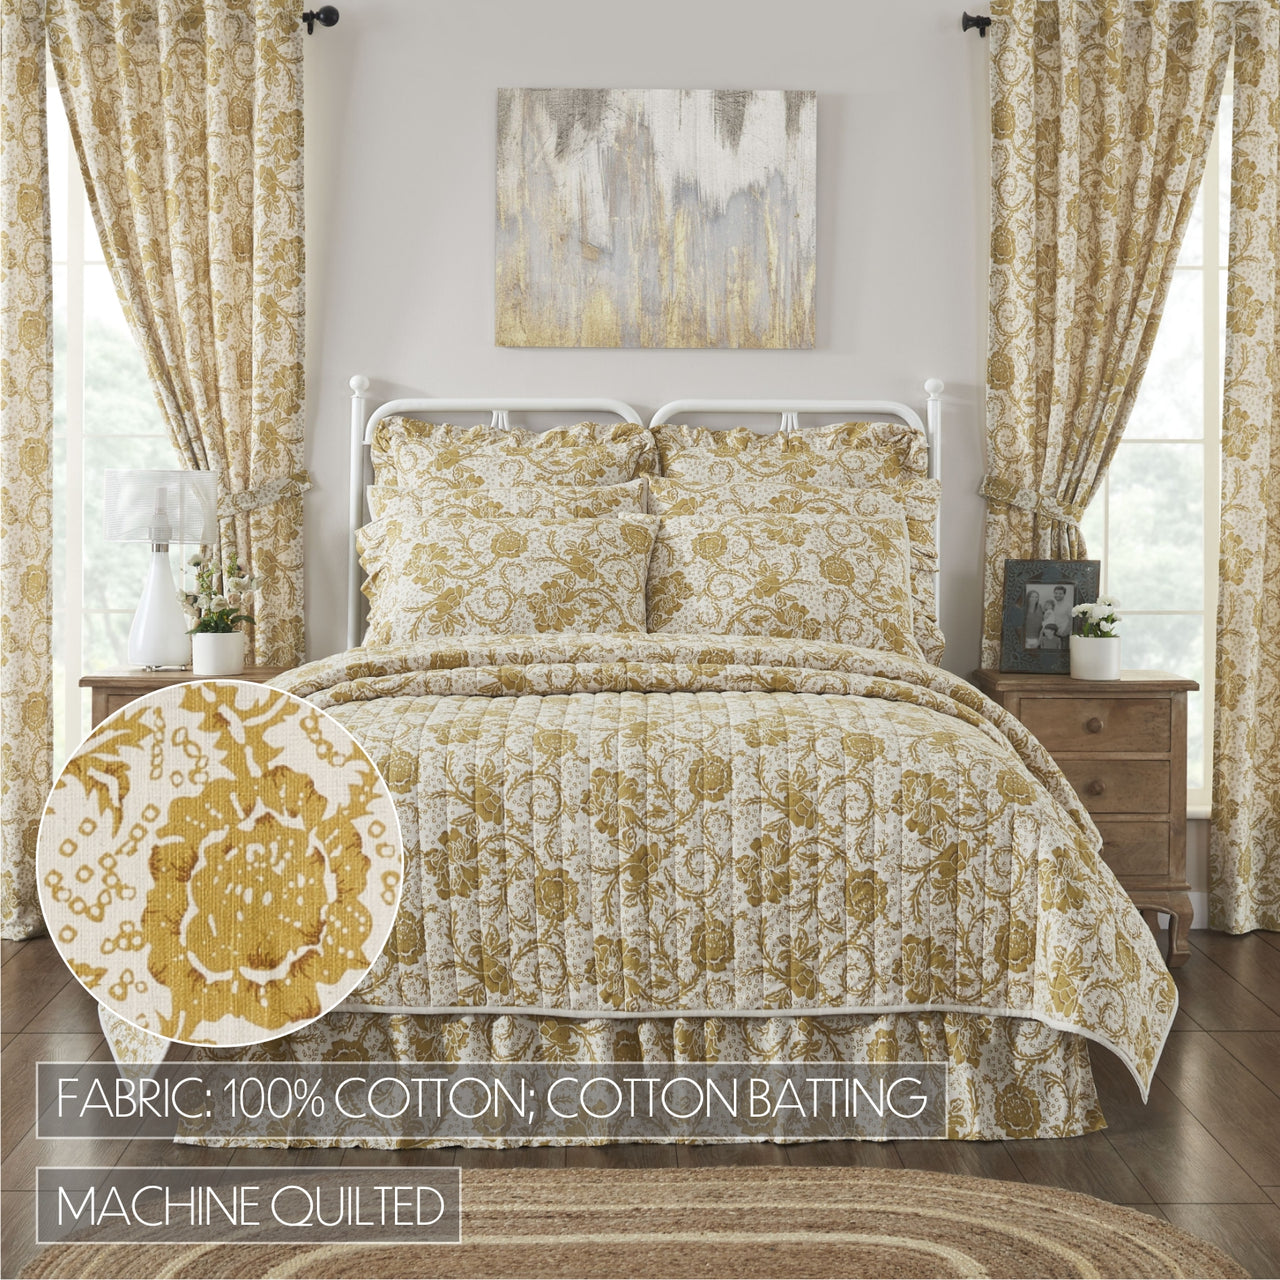 Dorset Gold Floral Luxury King Quilt 120WX105L VHC Brands